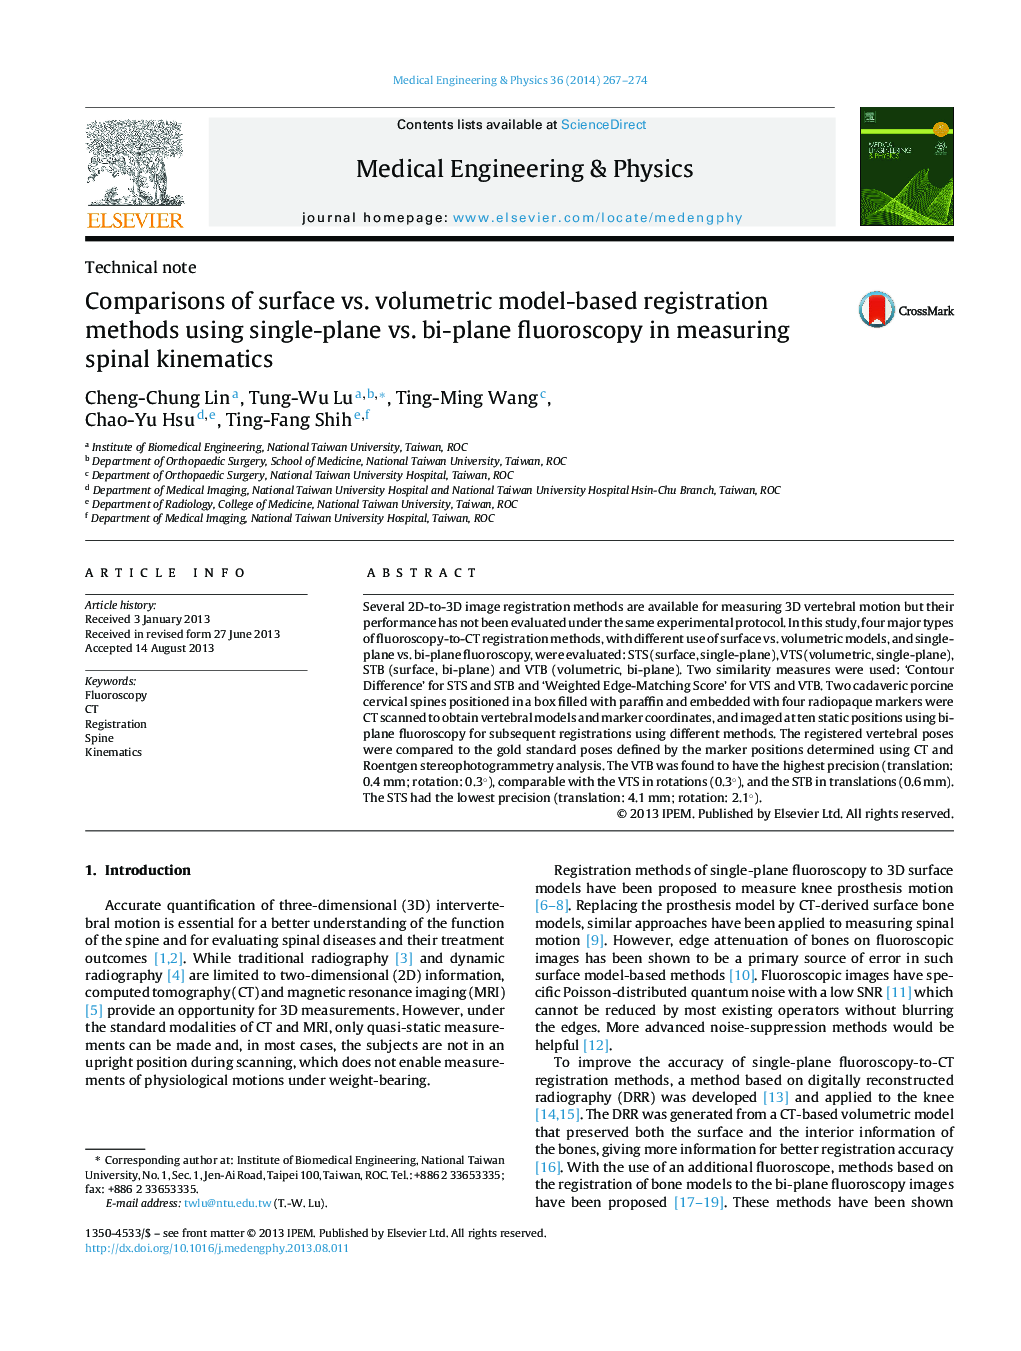 Comparisons of surface vs. volumetric model-based registration methods using single-plane vs. bi-plane fluoroscopy in measuring spinal kinematics